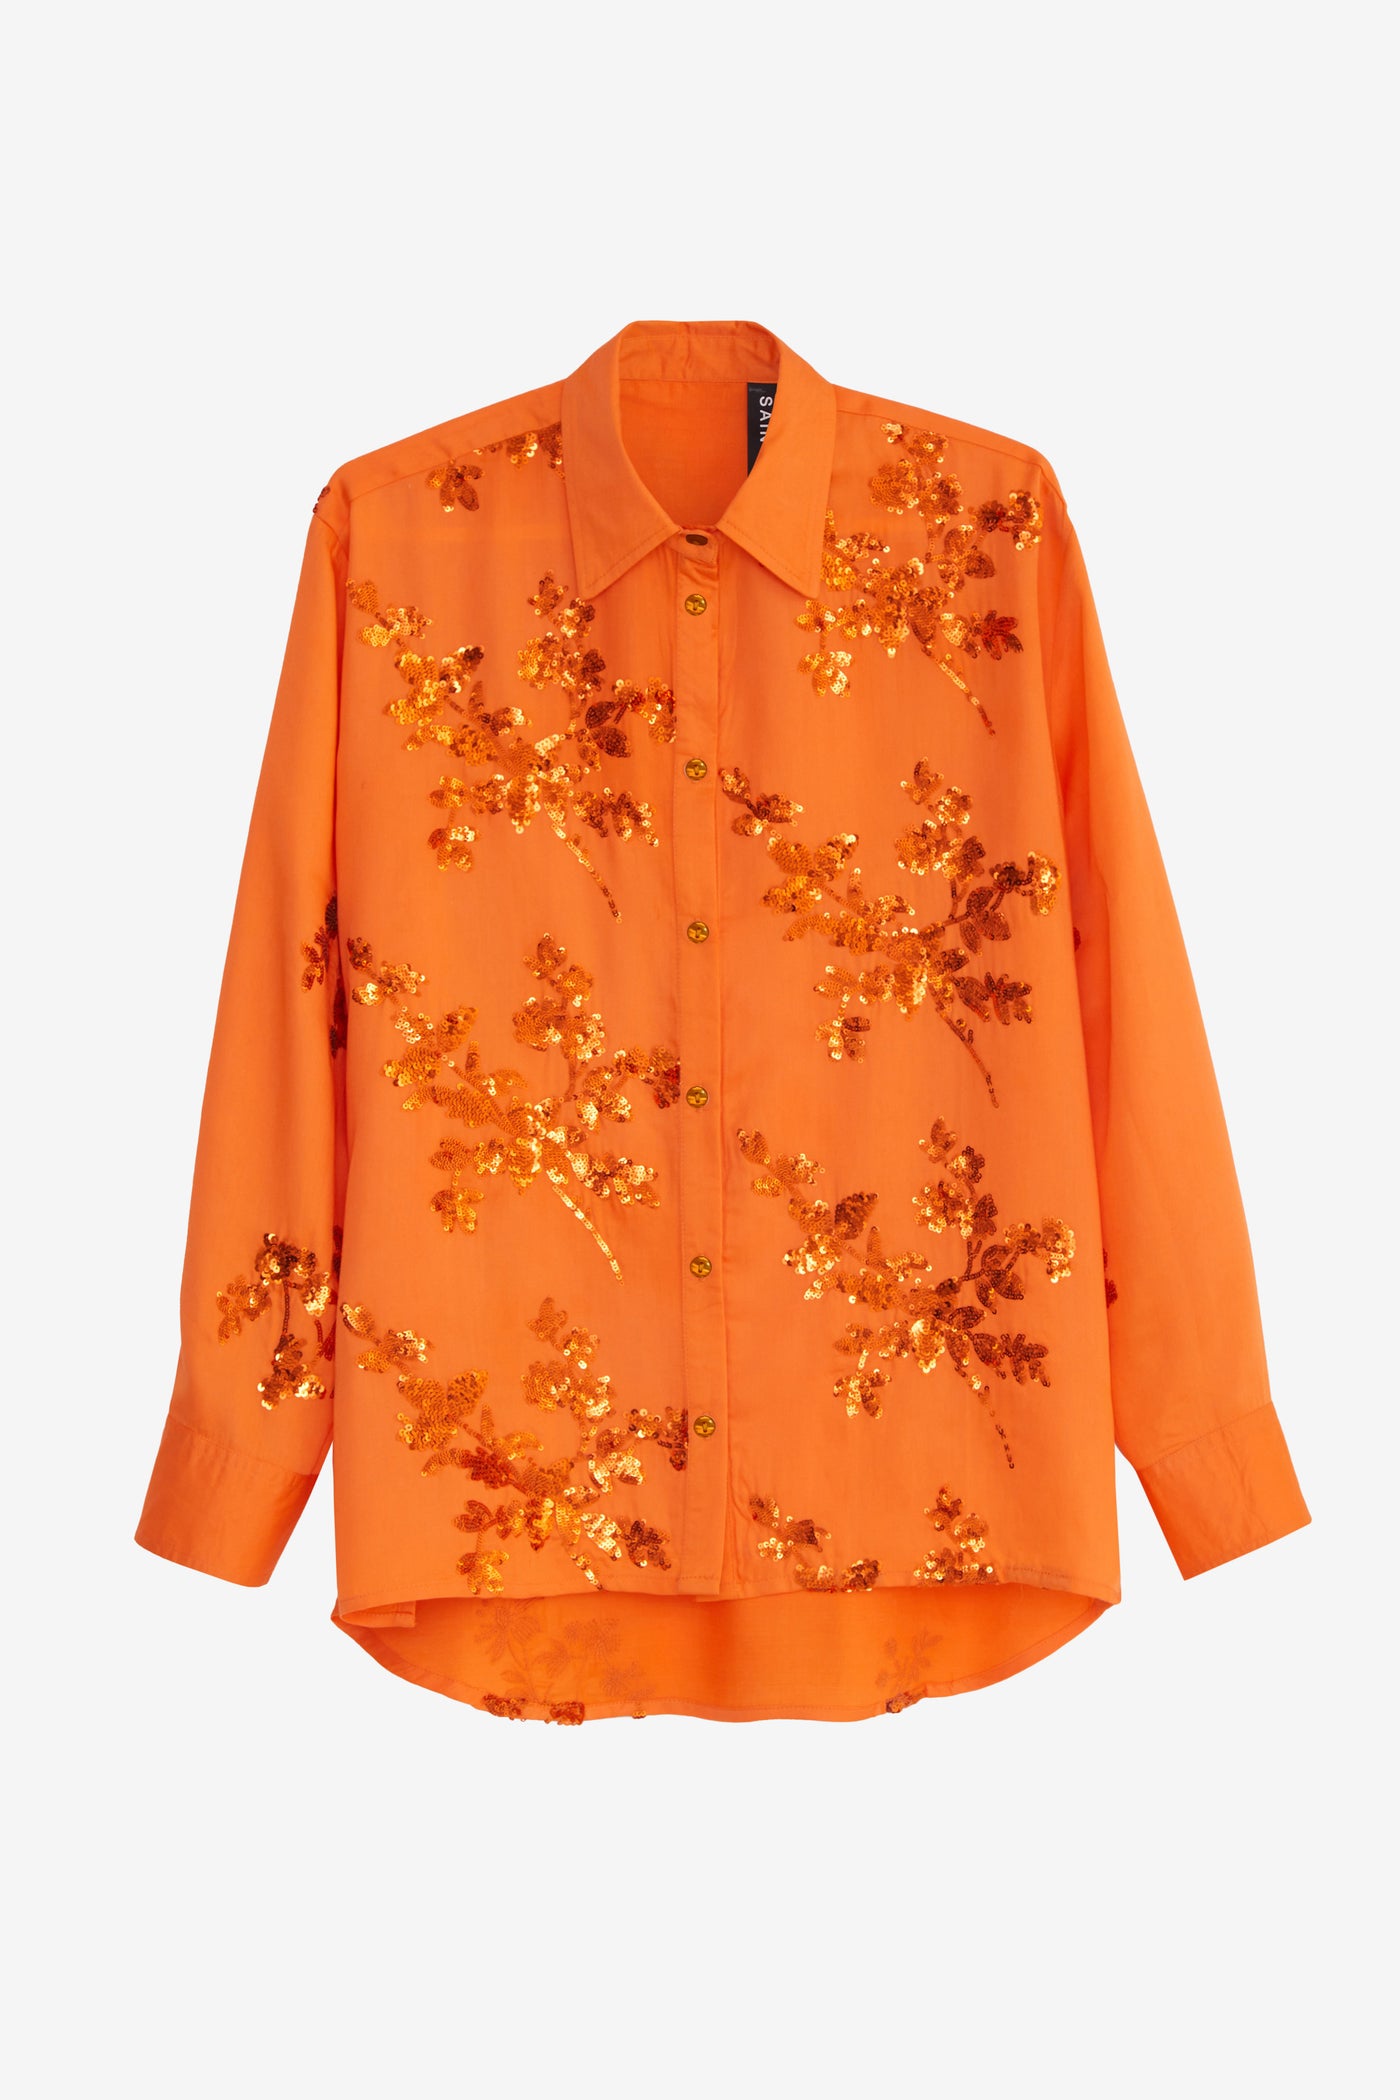 Camisa Pich naranja